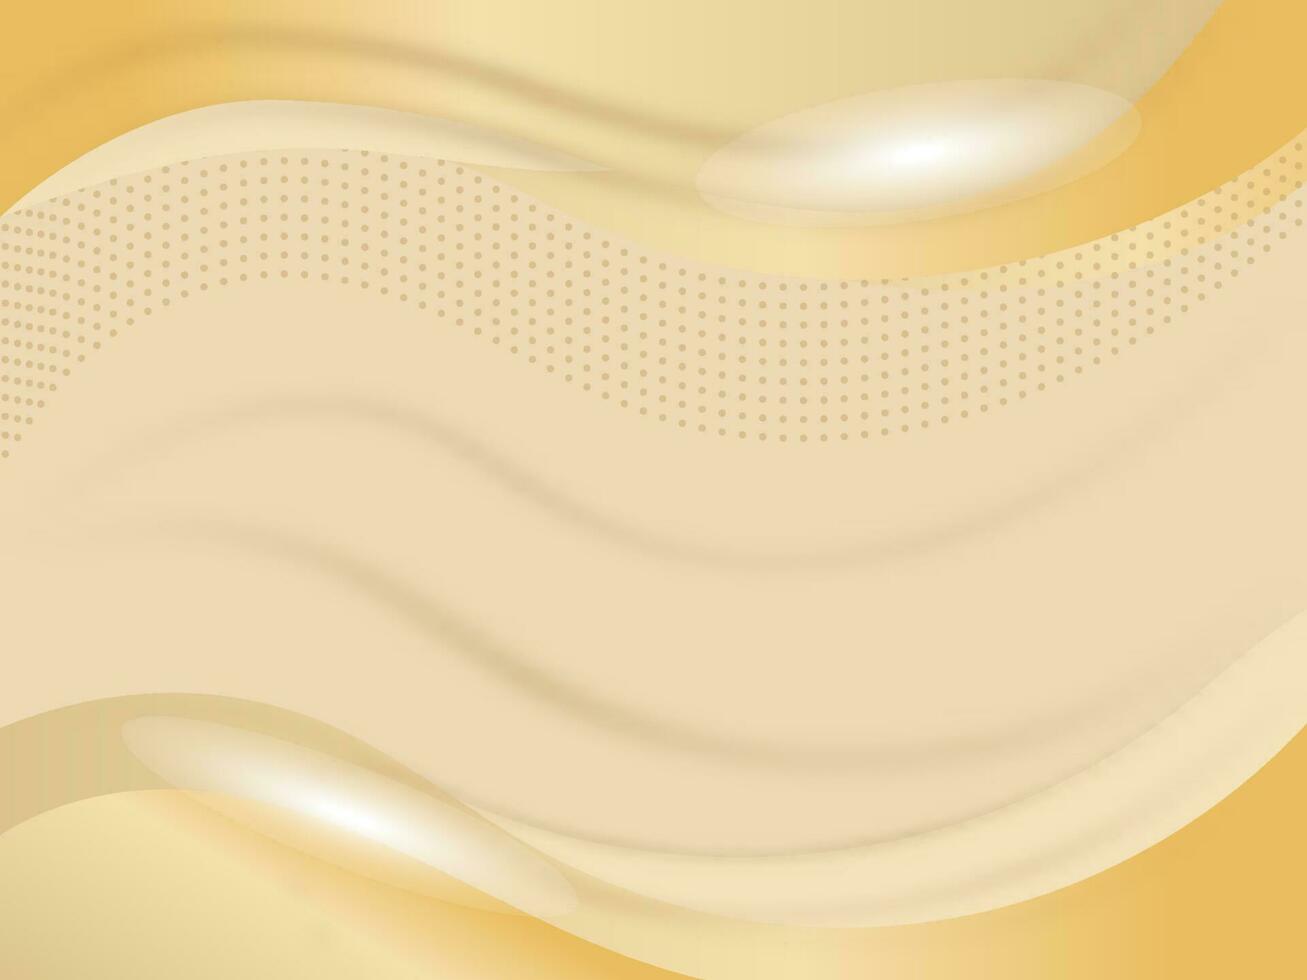 abstrakt gyllene Vinka bakgrund med prickar mönster. vektor